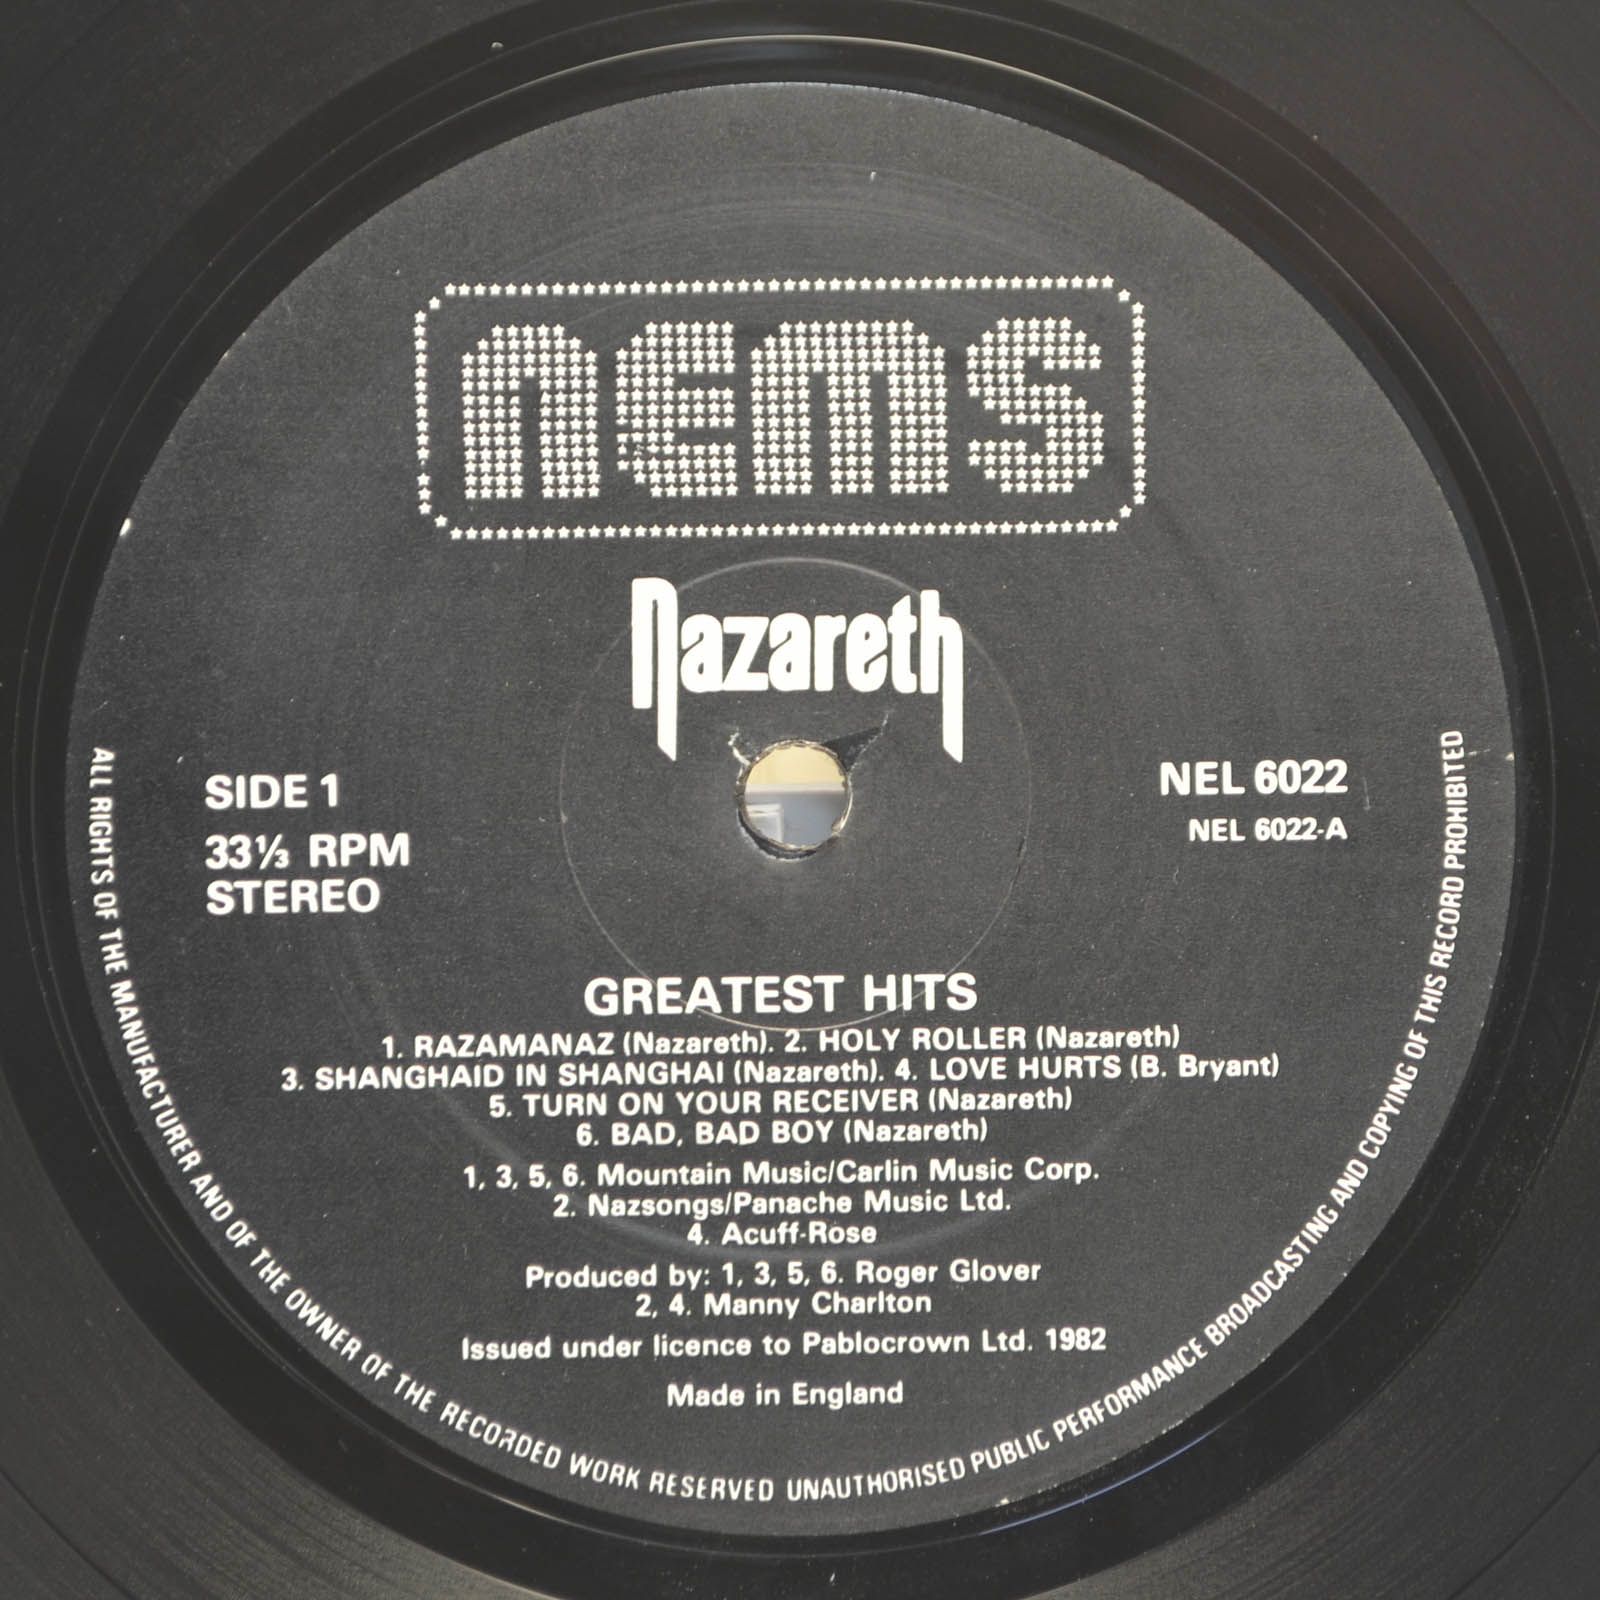 Nazareth — Greatest Hits (UK), 1975